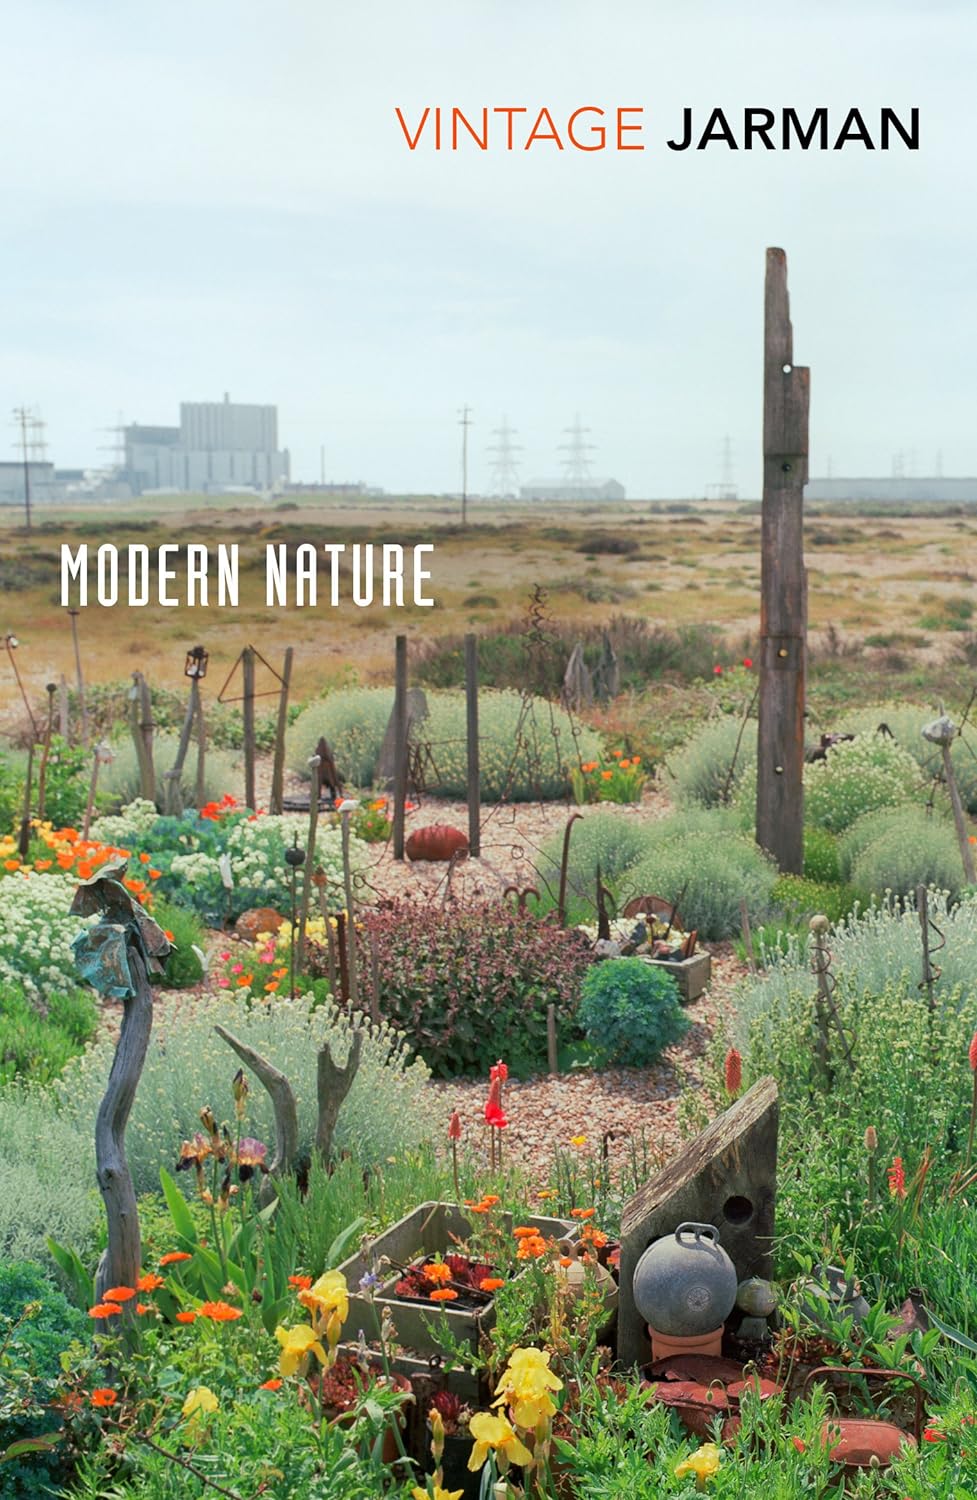 Modern Nature, Derek Jarman